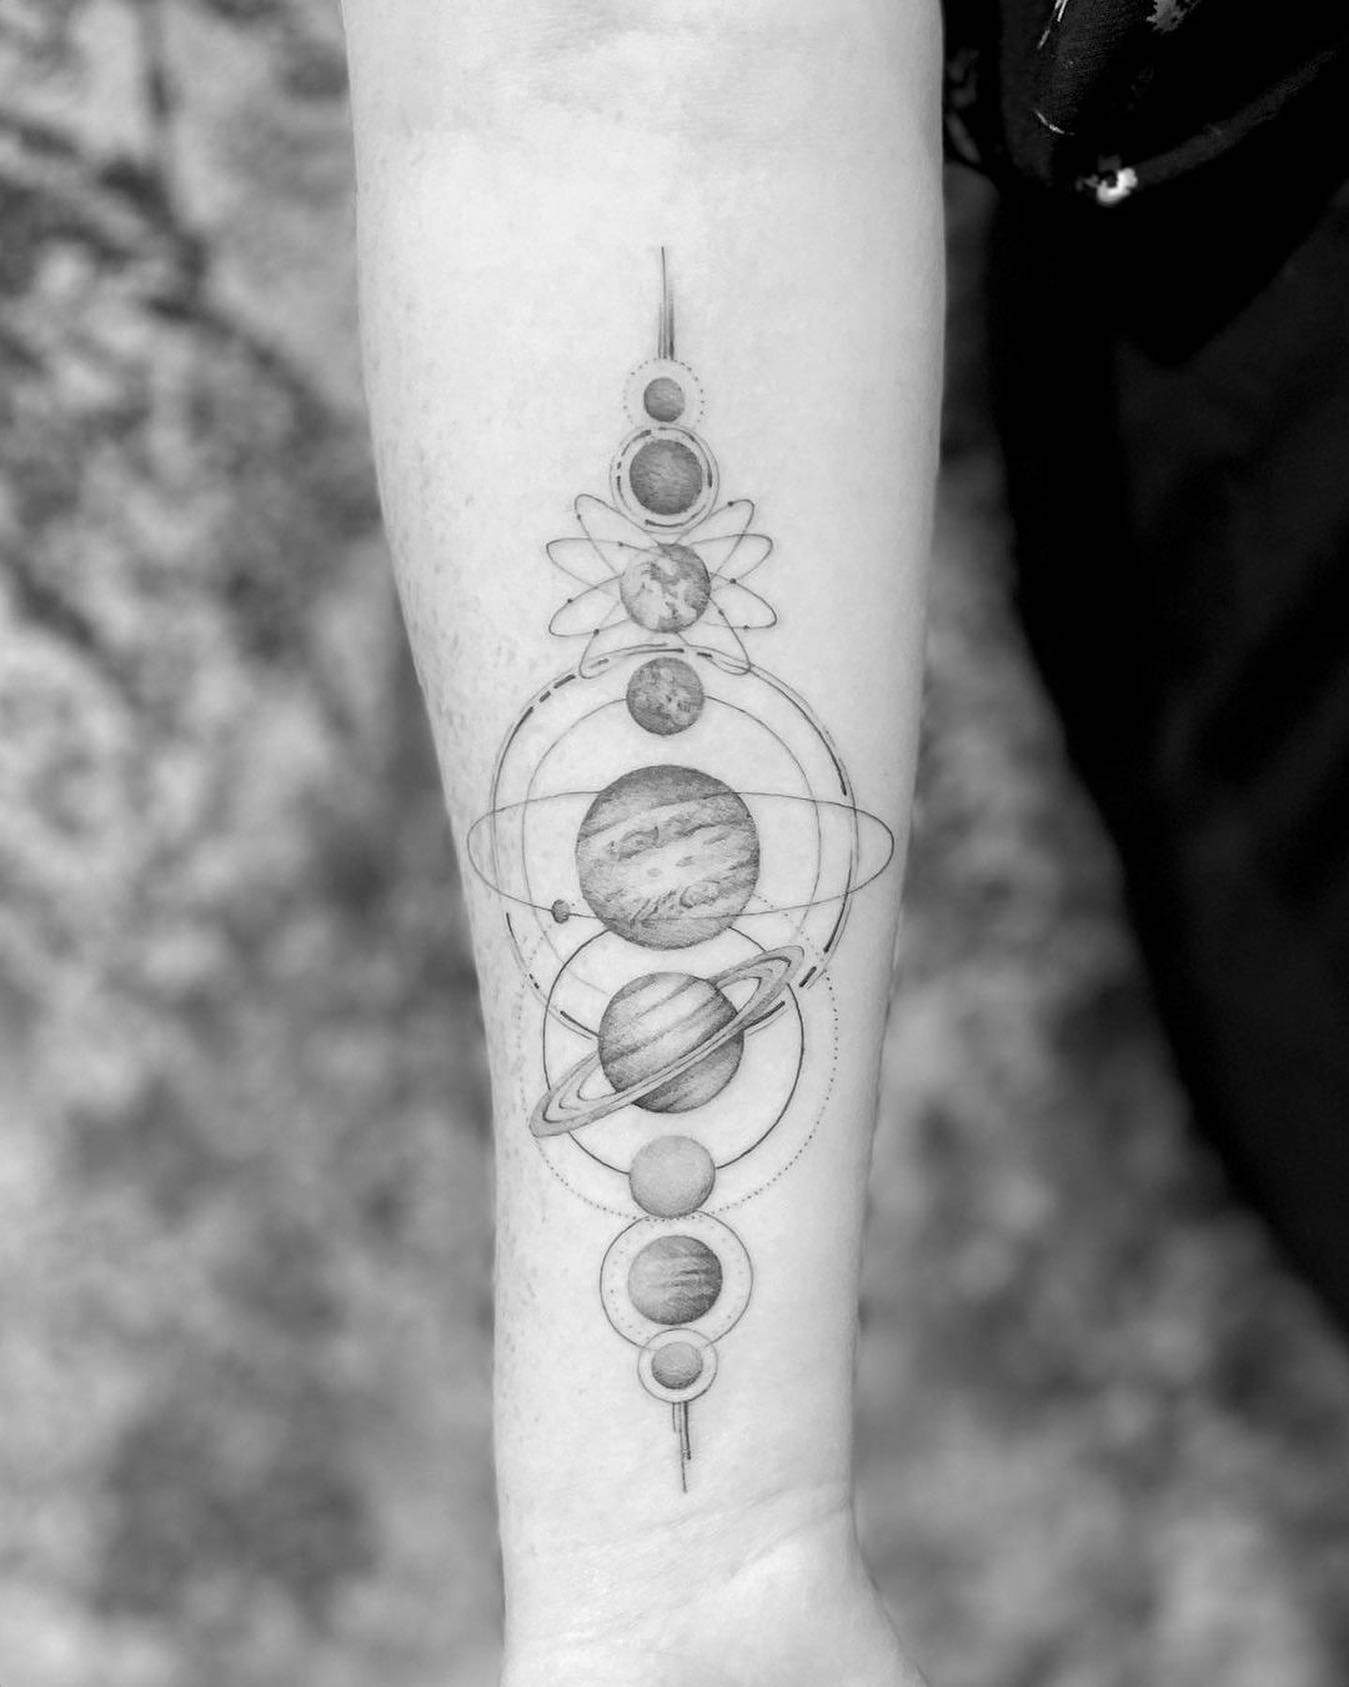 Tatuaje del sistema solar en el brazo.